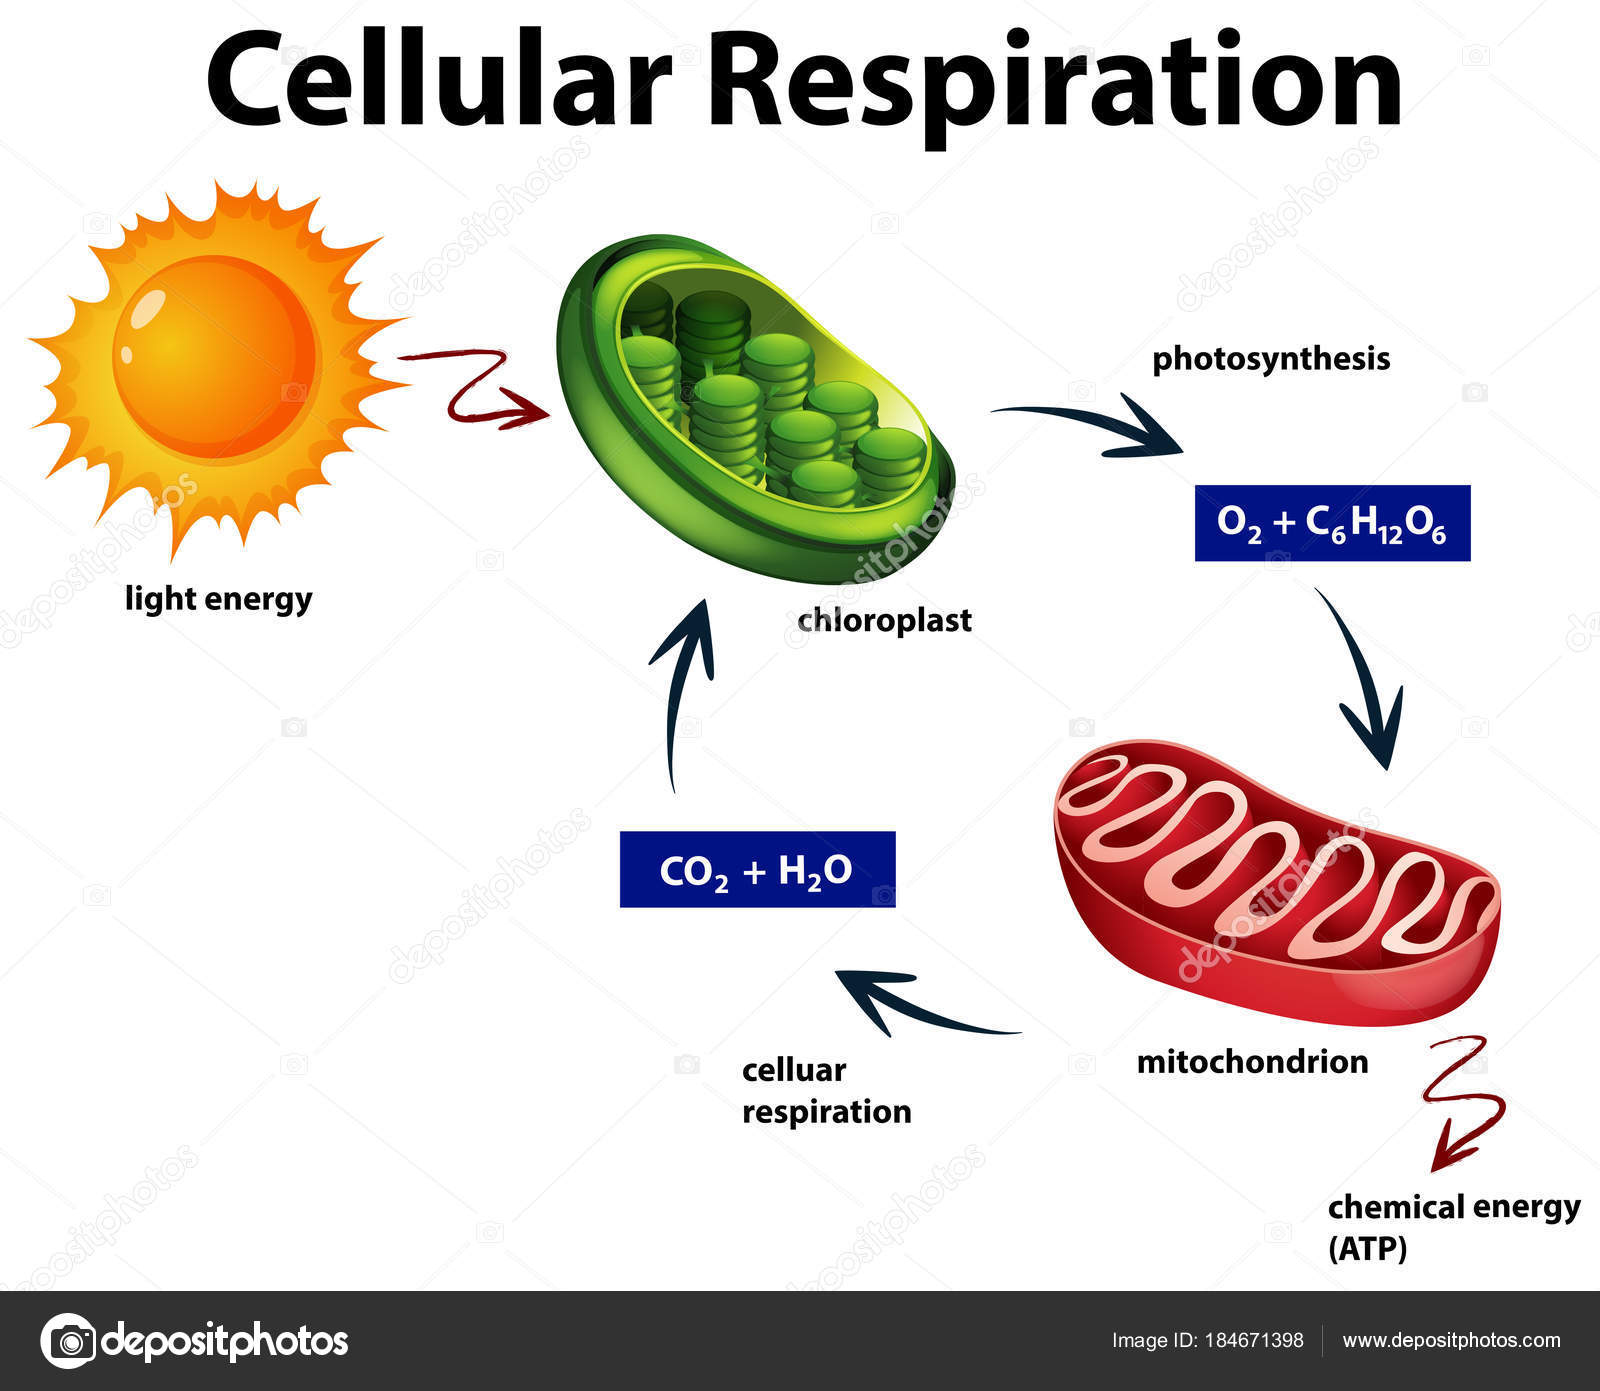 cellular respiration - Class 4 - Quizizz